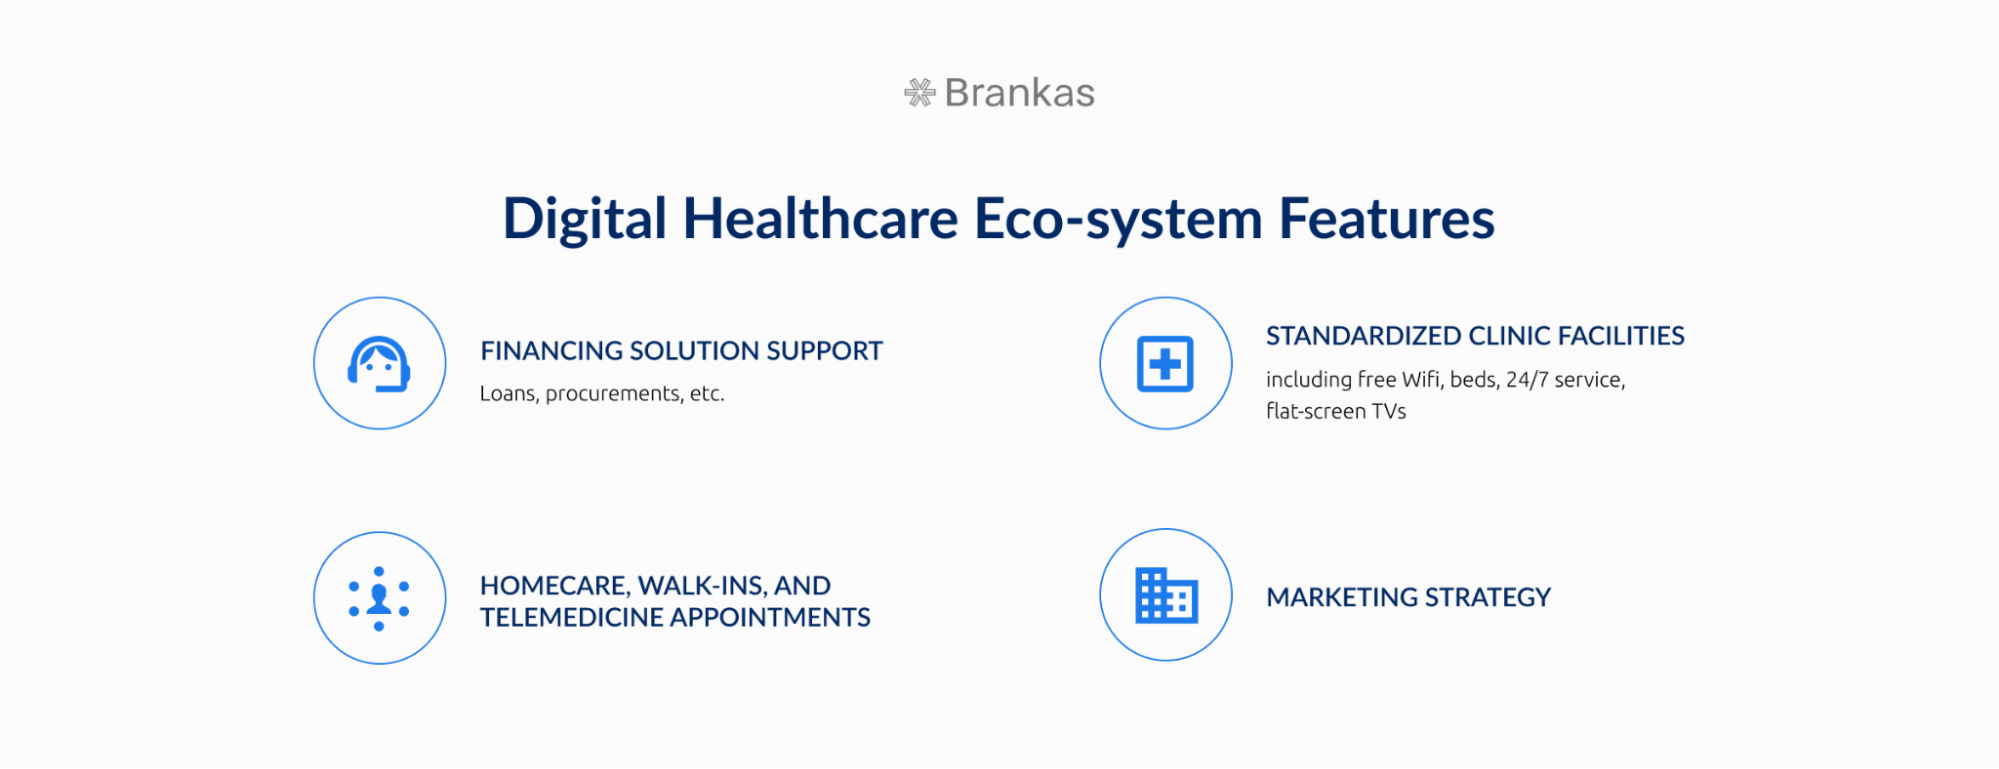 KlinikGo Digital Healthcare eco-system Featured in Brankas blog.